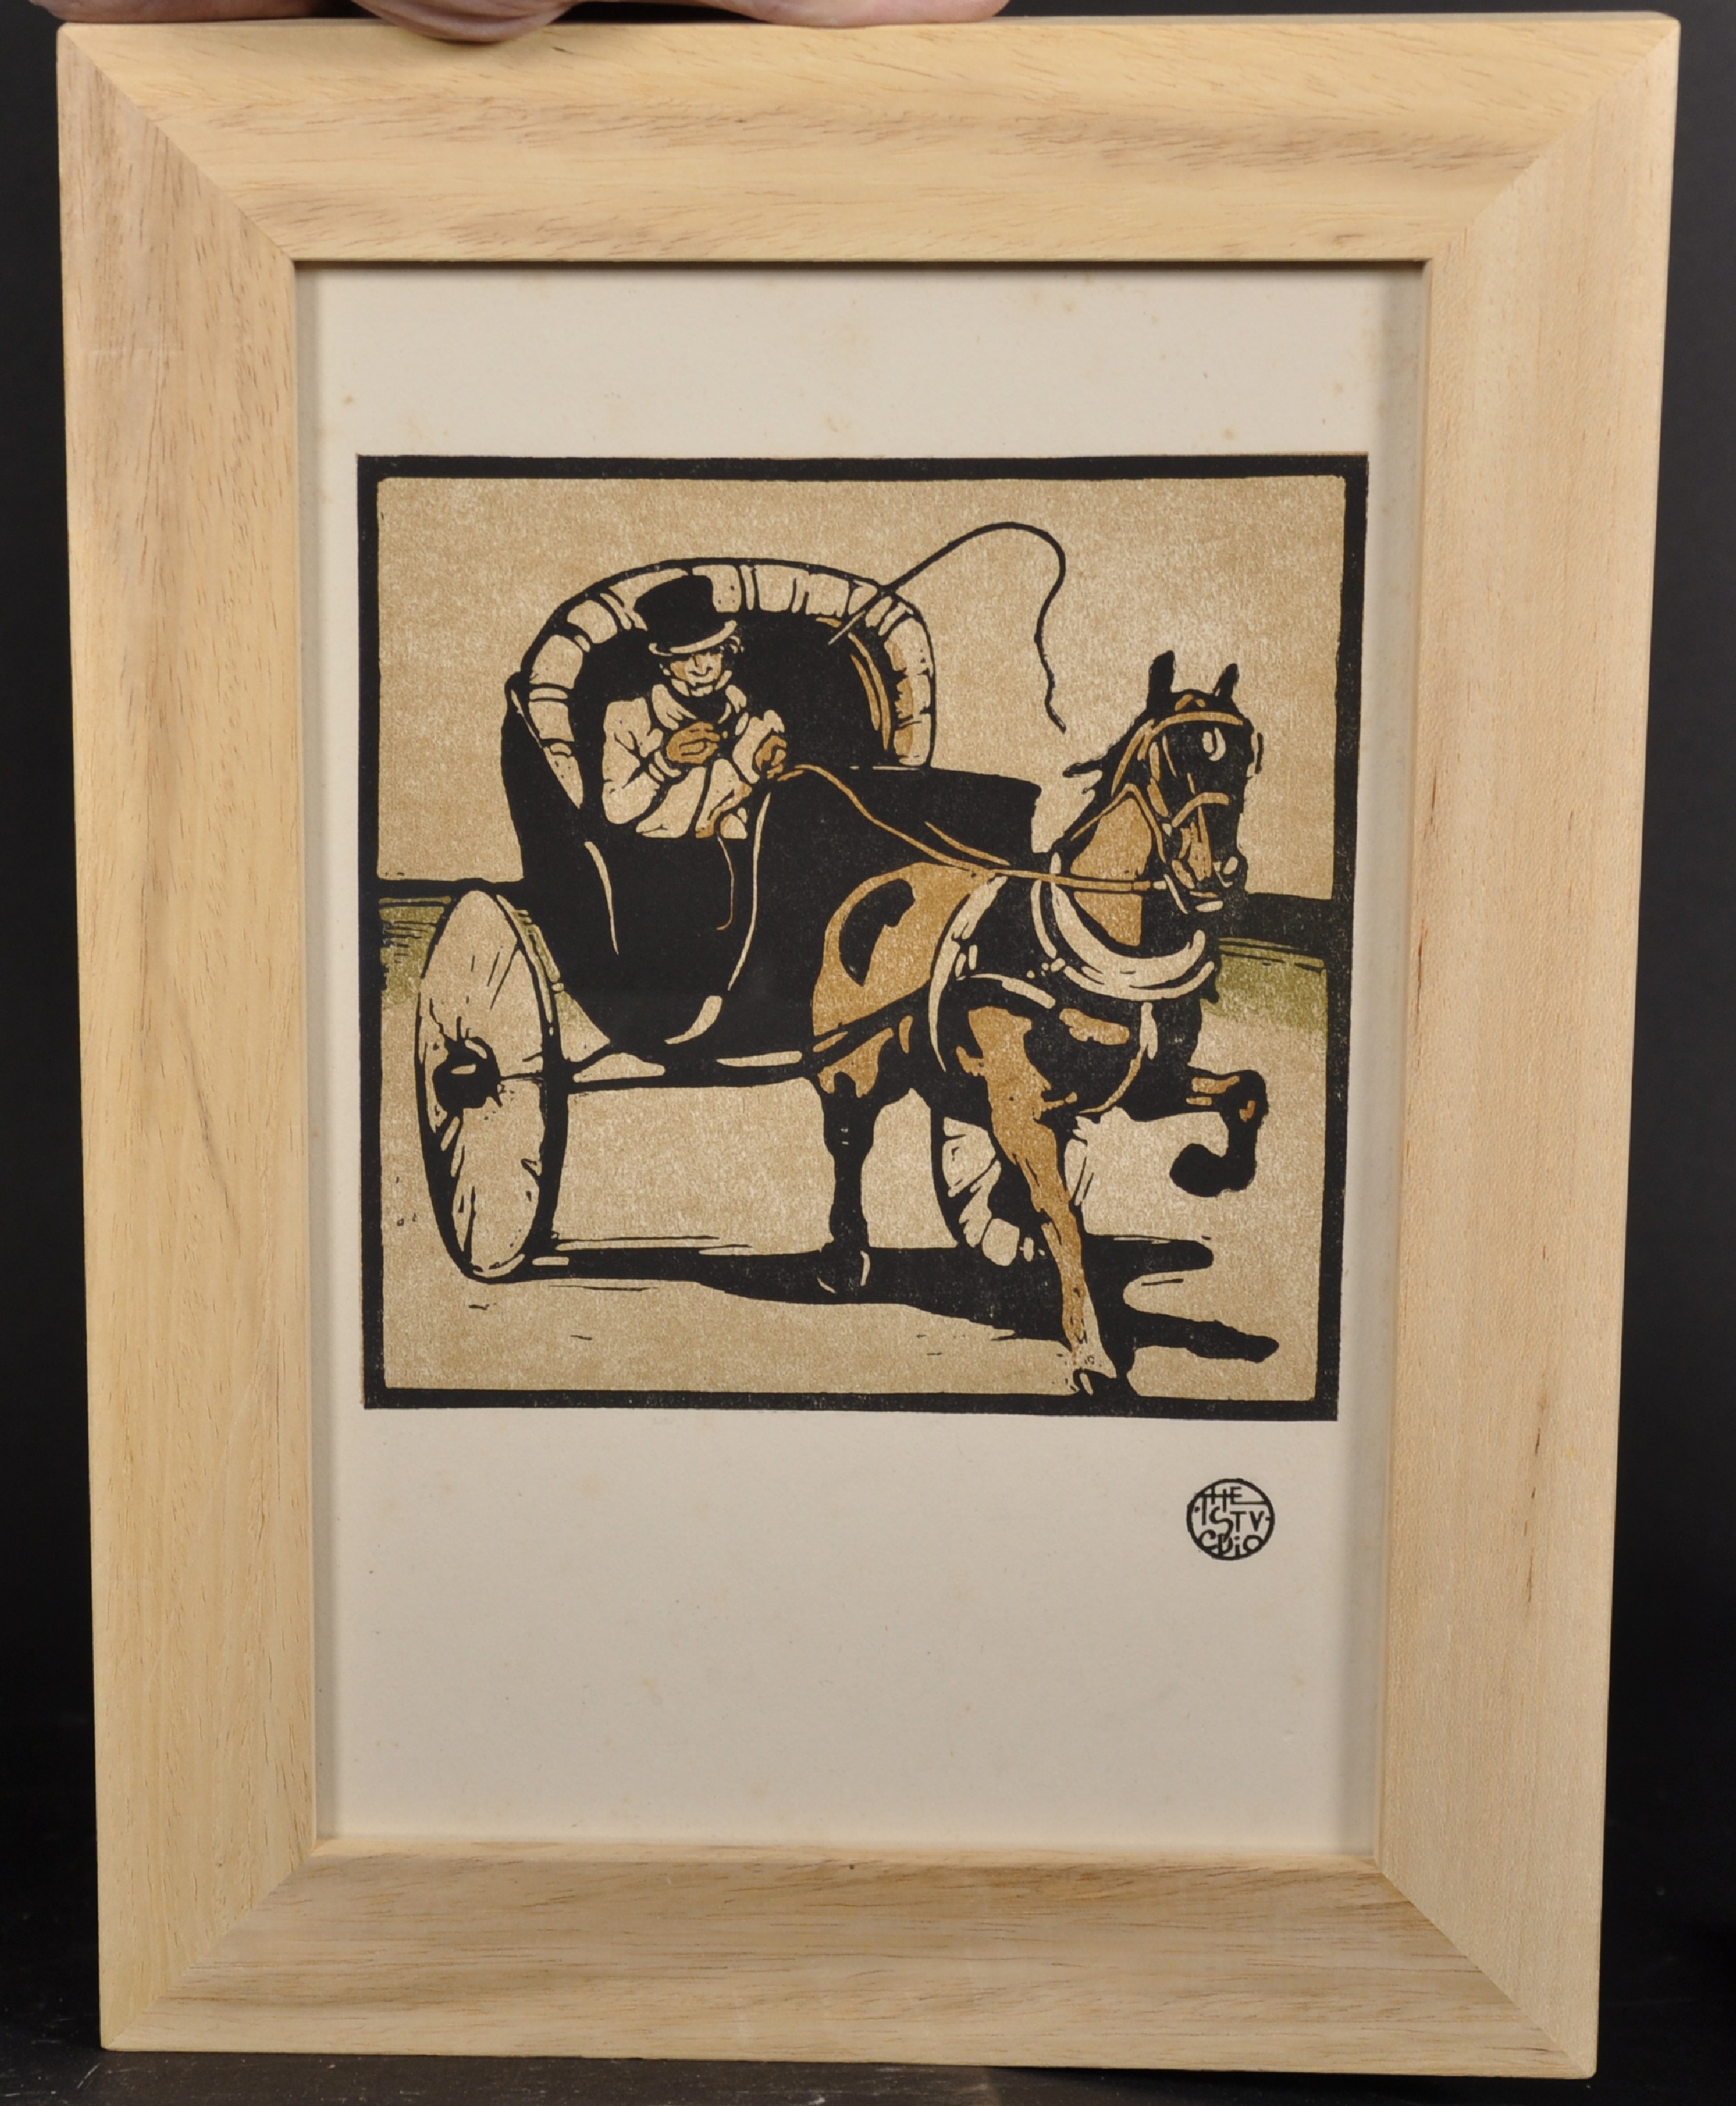 William Nicholson (1872-1949) British. "The Cabriolet", Woodcut, 6" x 6". - Image 2 of 4